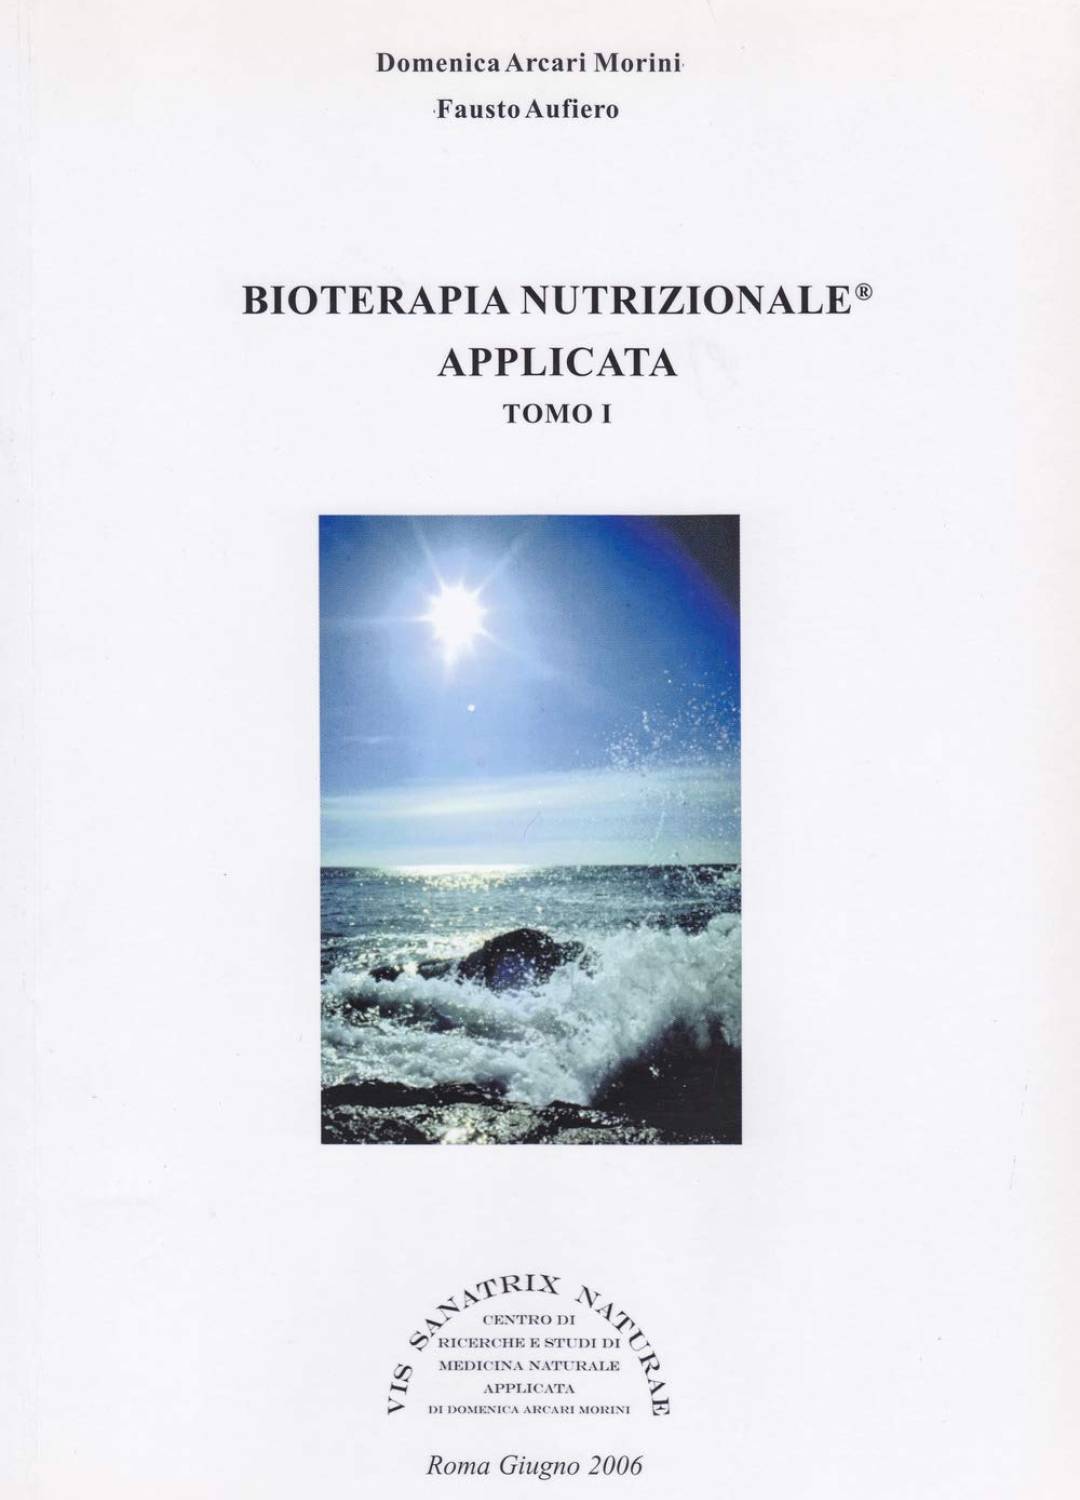 Bioterapia Nutrizionale applicata - Tomo I, II e III - Arcari Morini, Aufiero